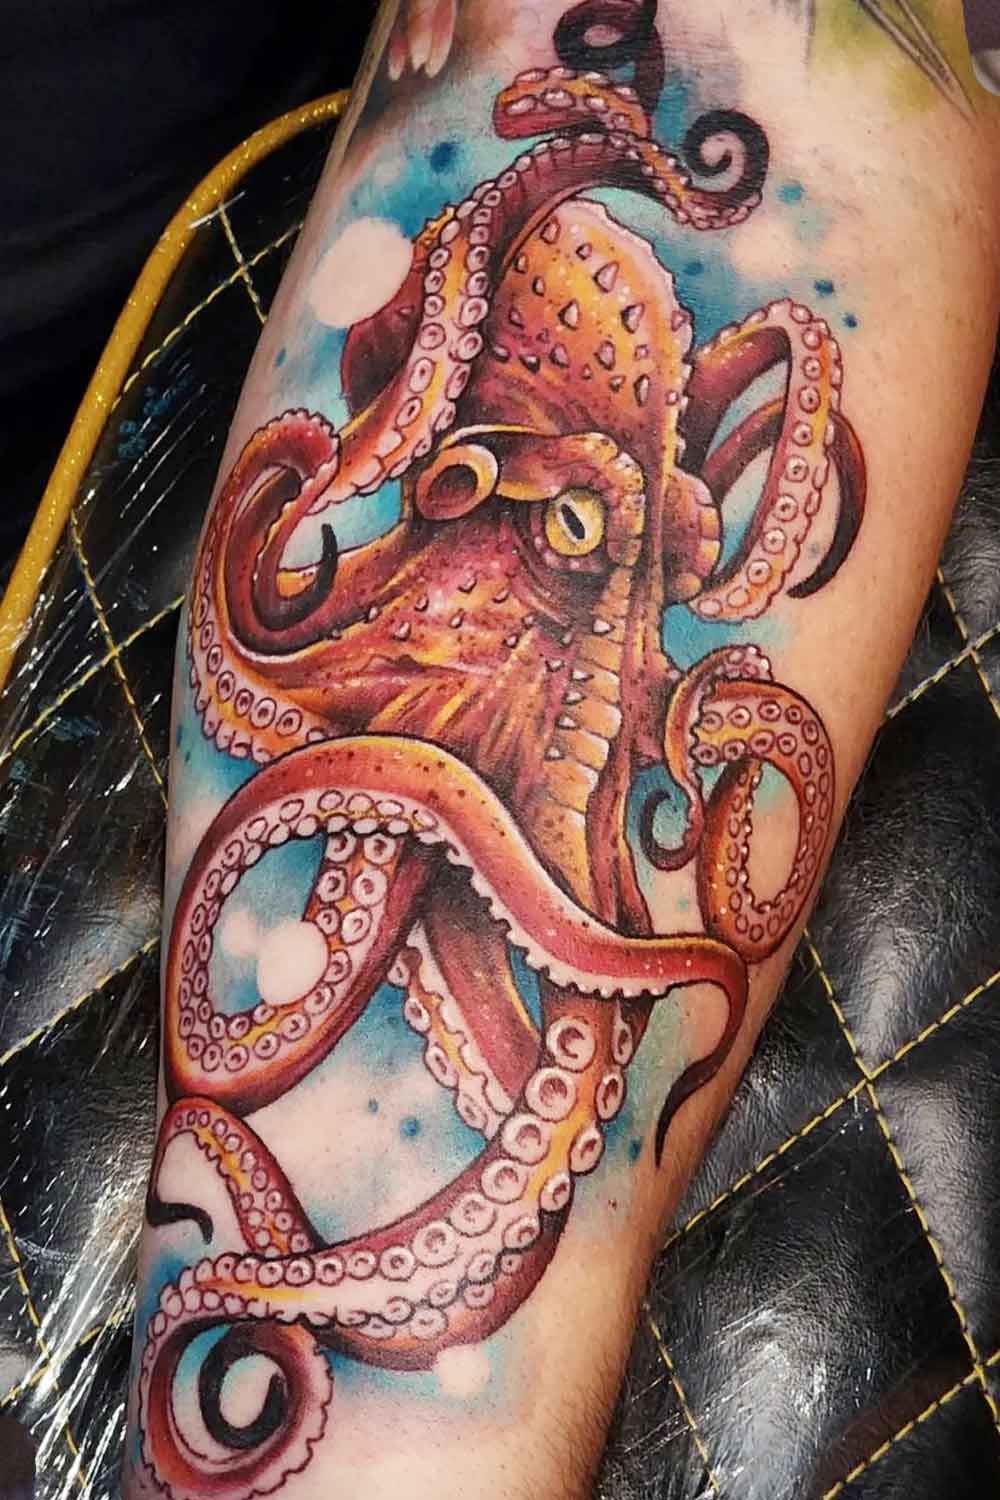 Red Octopus Tattoo Idea